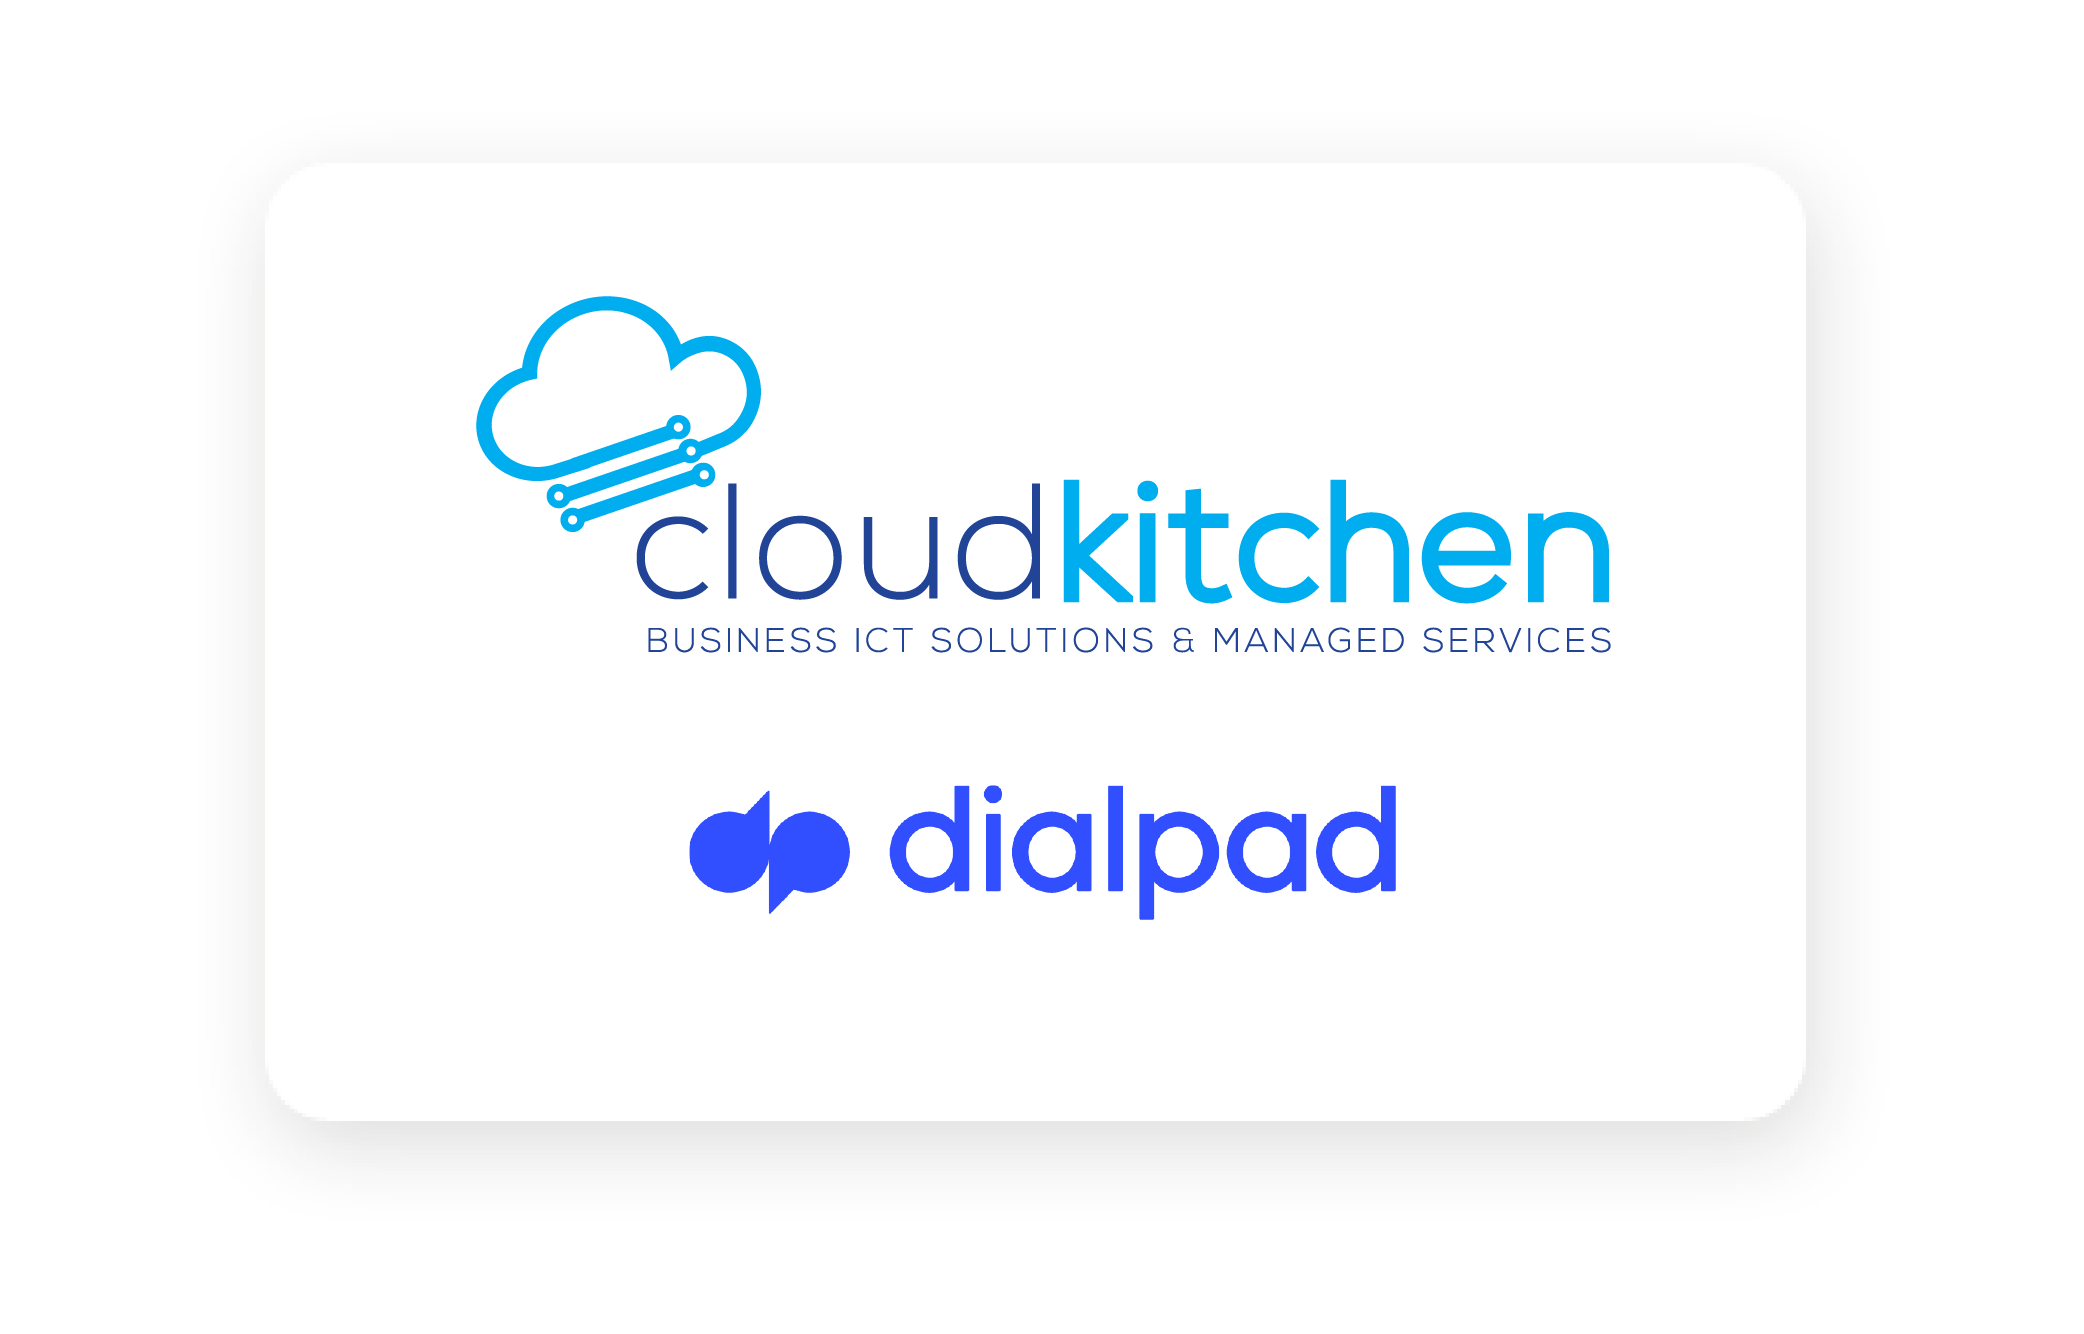 Cloud Kitchen partnered with Dialpad